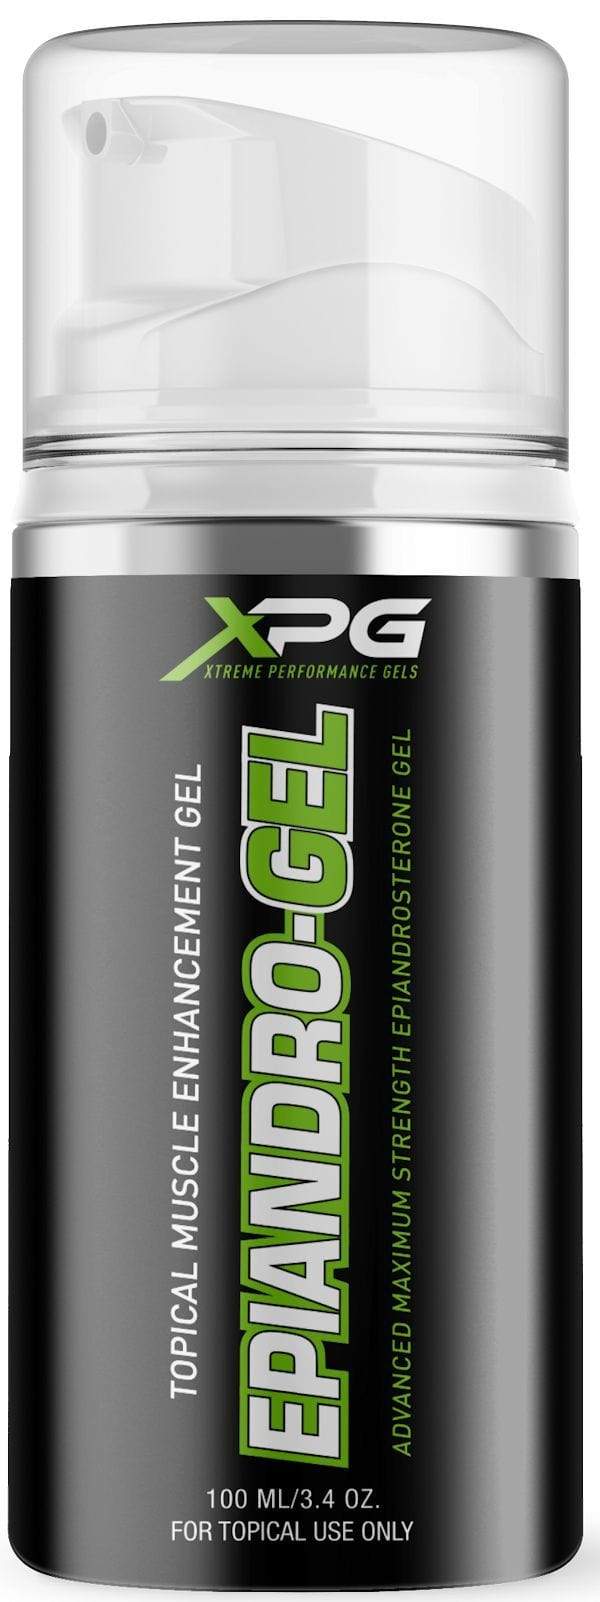 Xtreme Performance Gels XPG EpiAndro Gels Tropical Muscle Enhancement